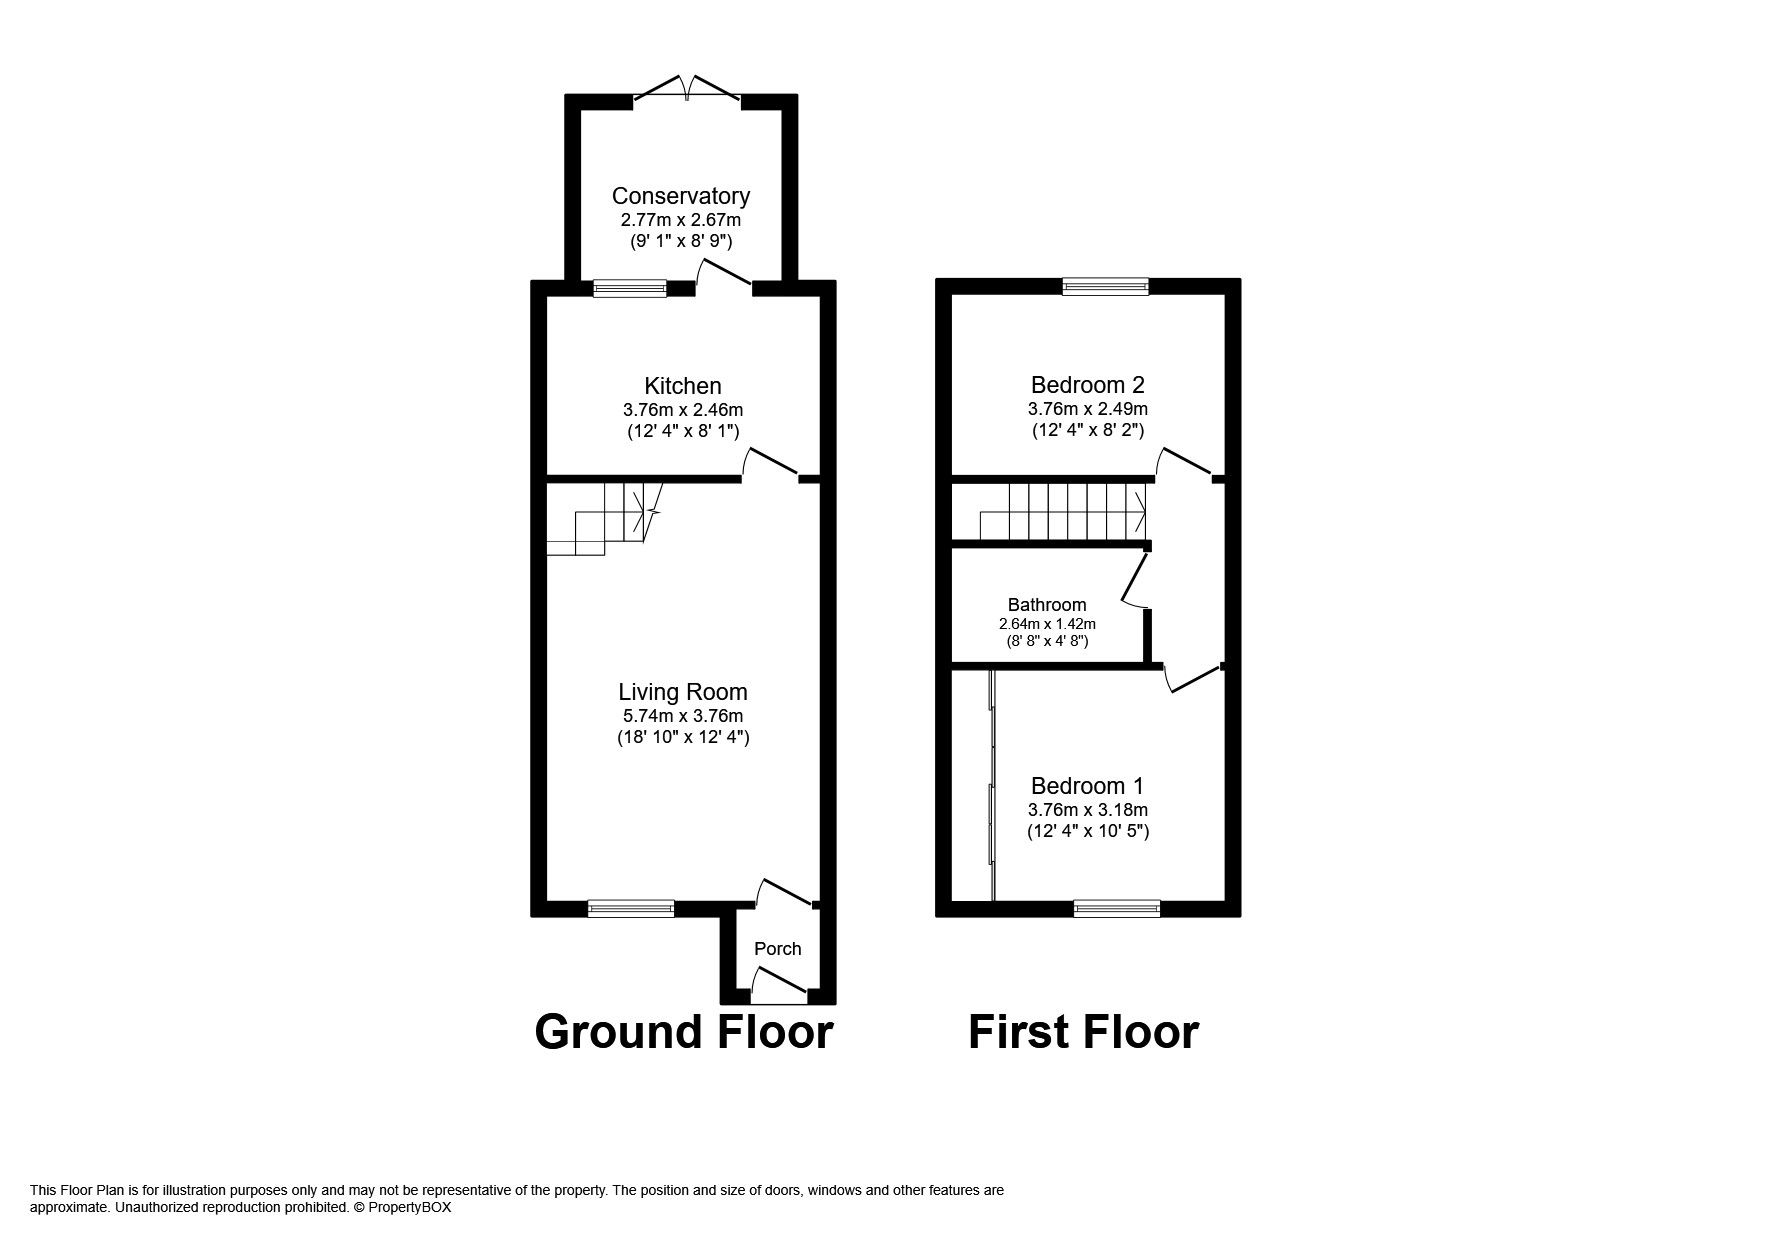 Floorplan for 2DFloorPlan (22)